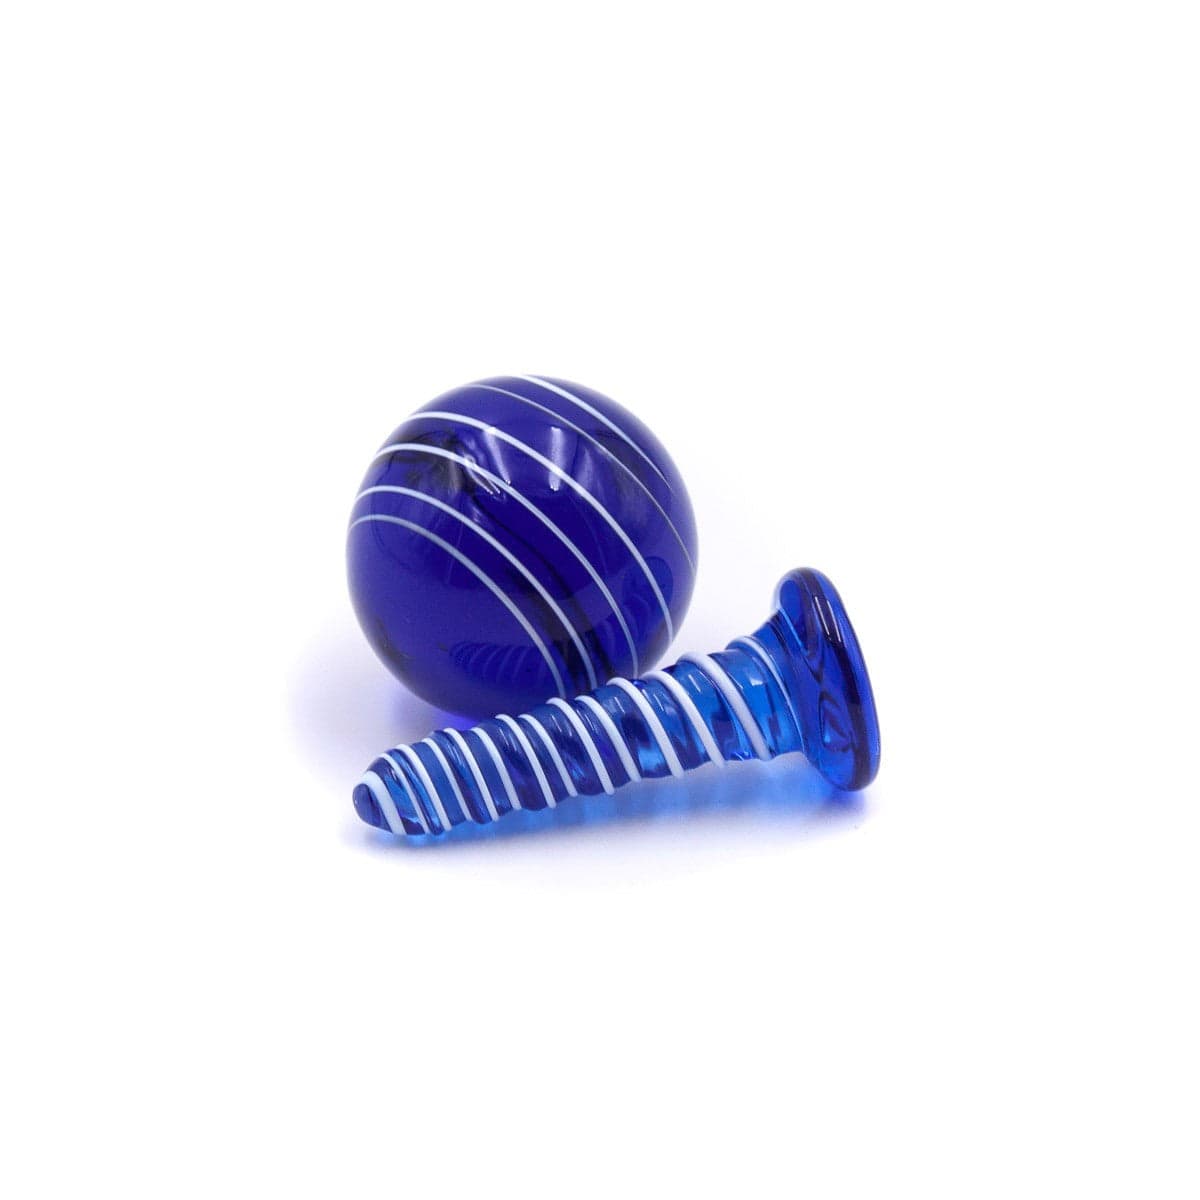 The Stash Shack Carb Cap Blue Glass Terp Screw and Marble Slurper Cap Set